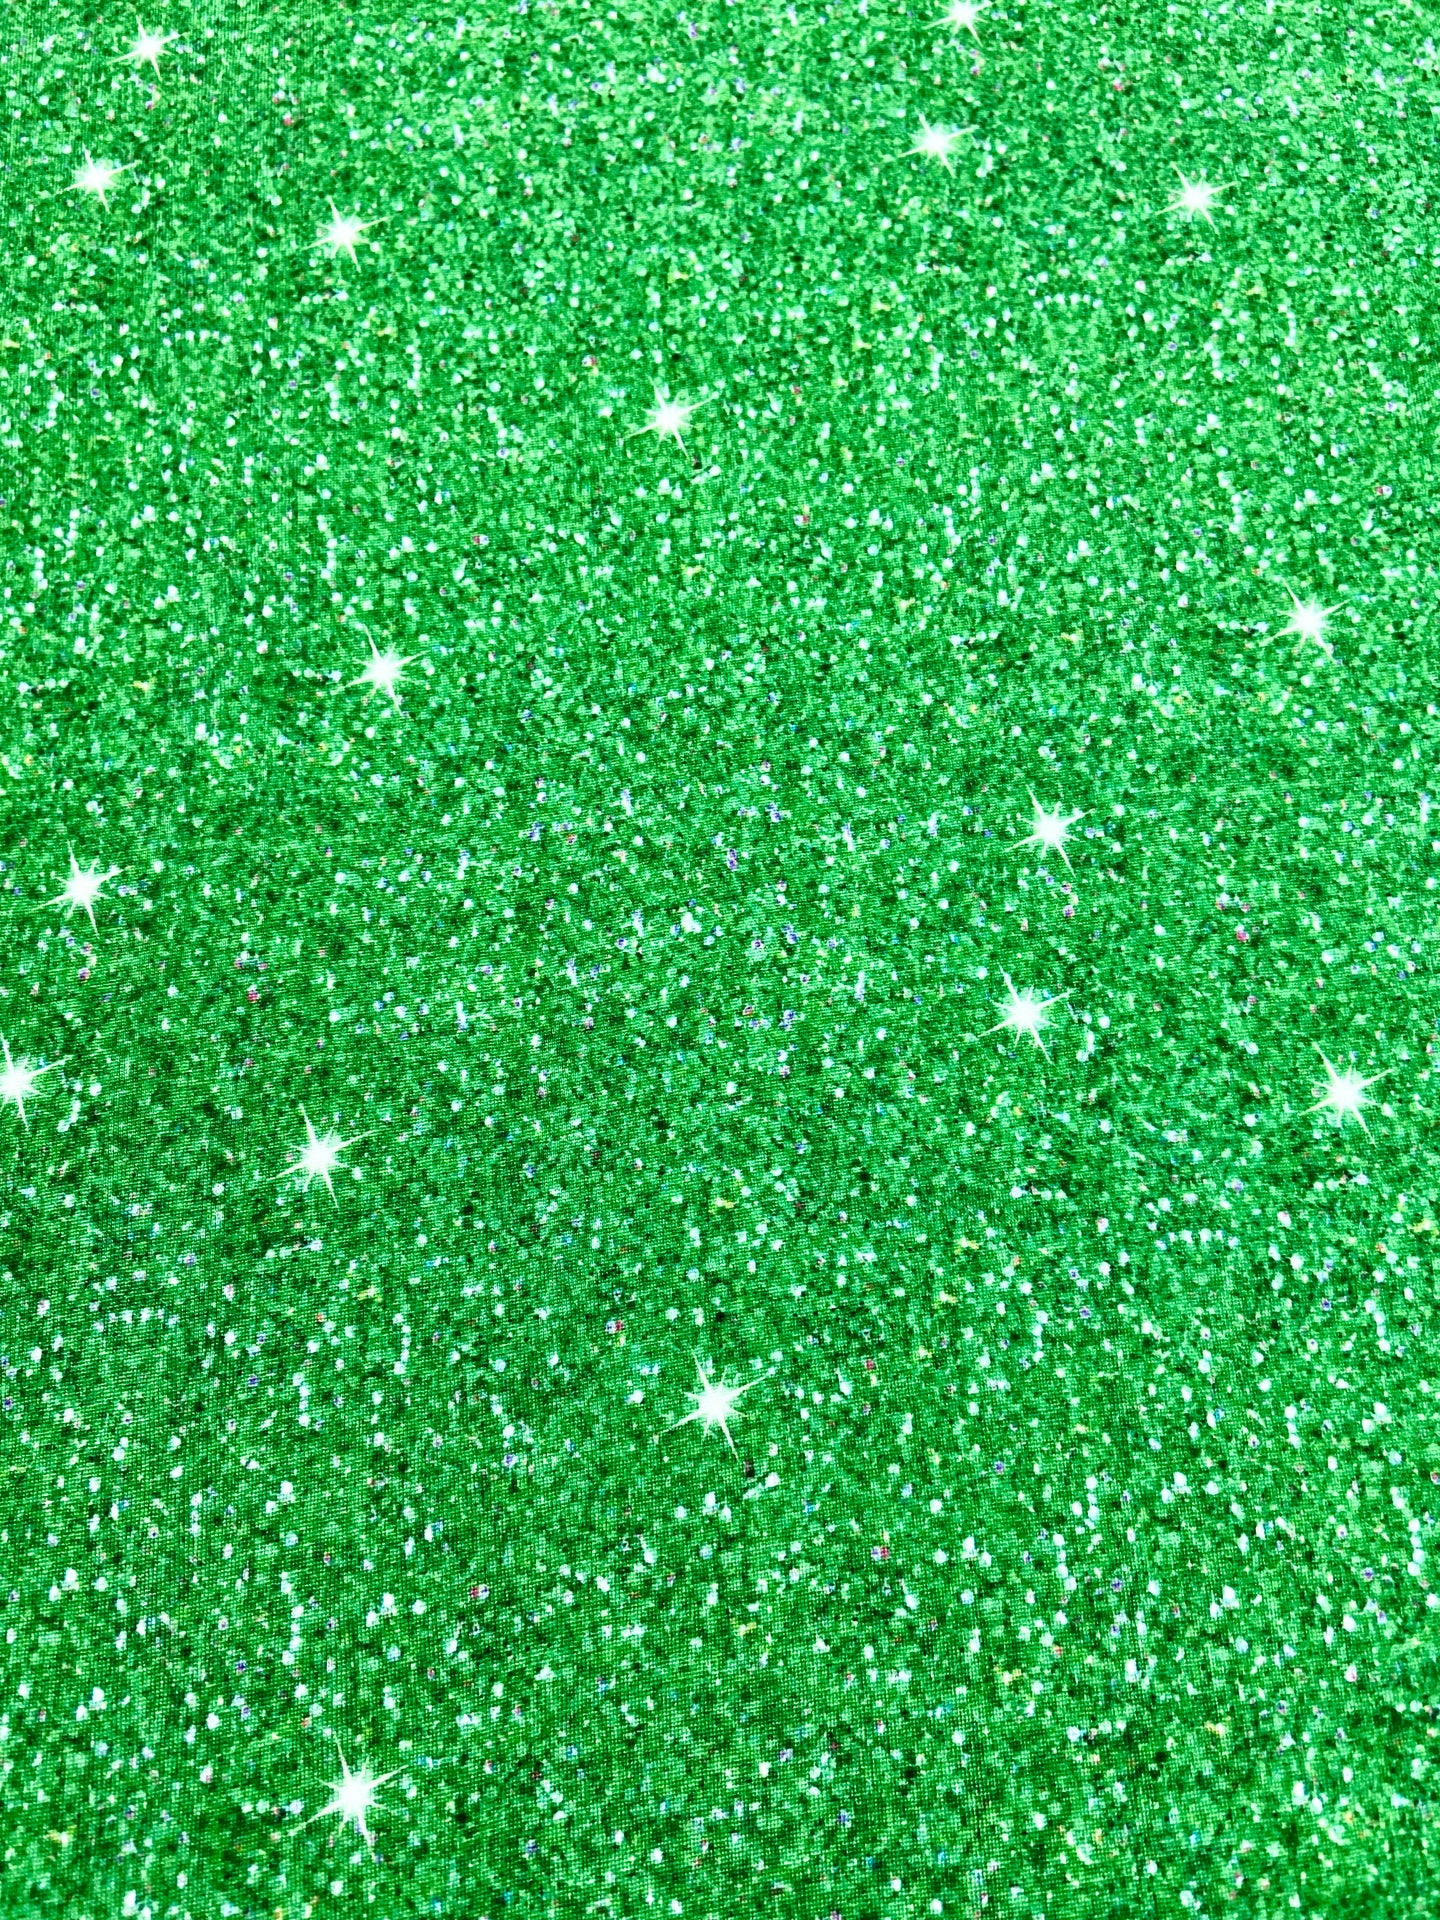 DBP Green Glitter